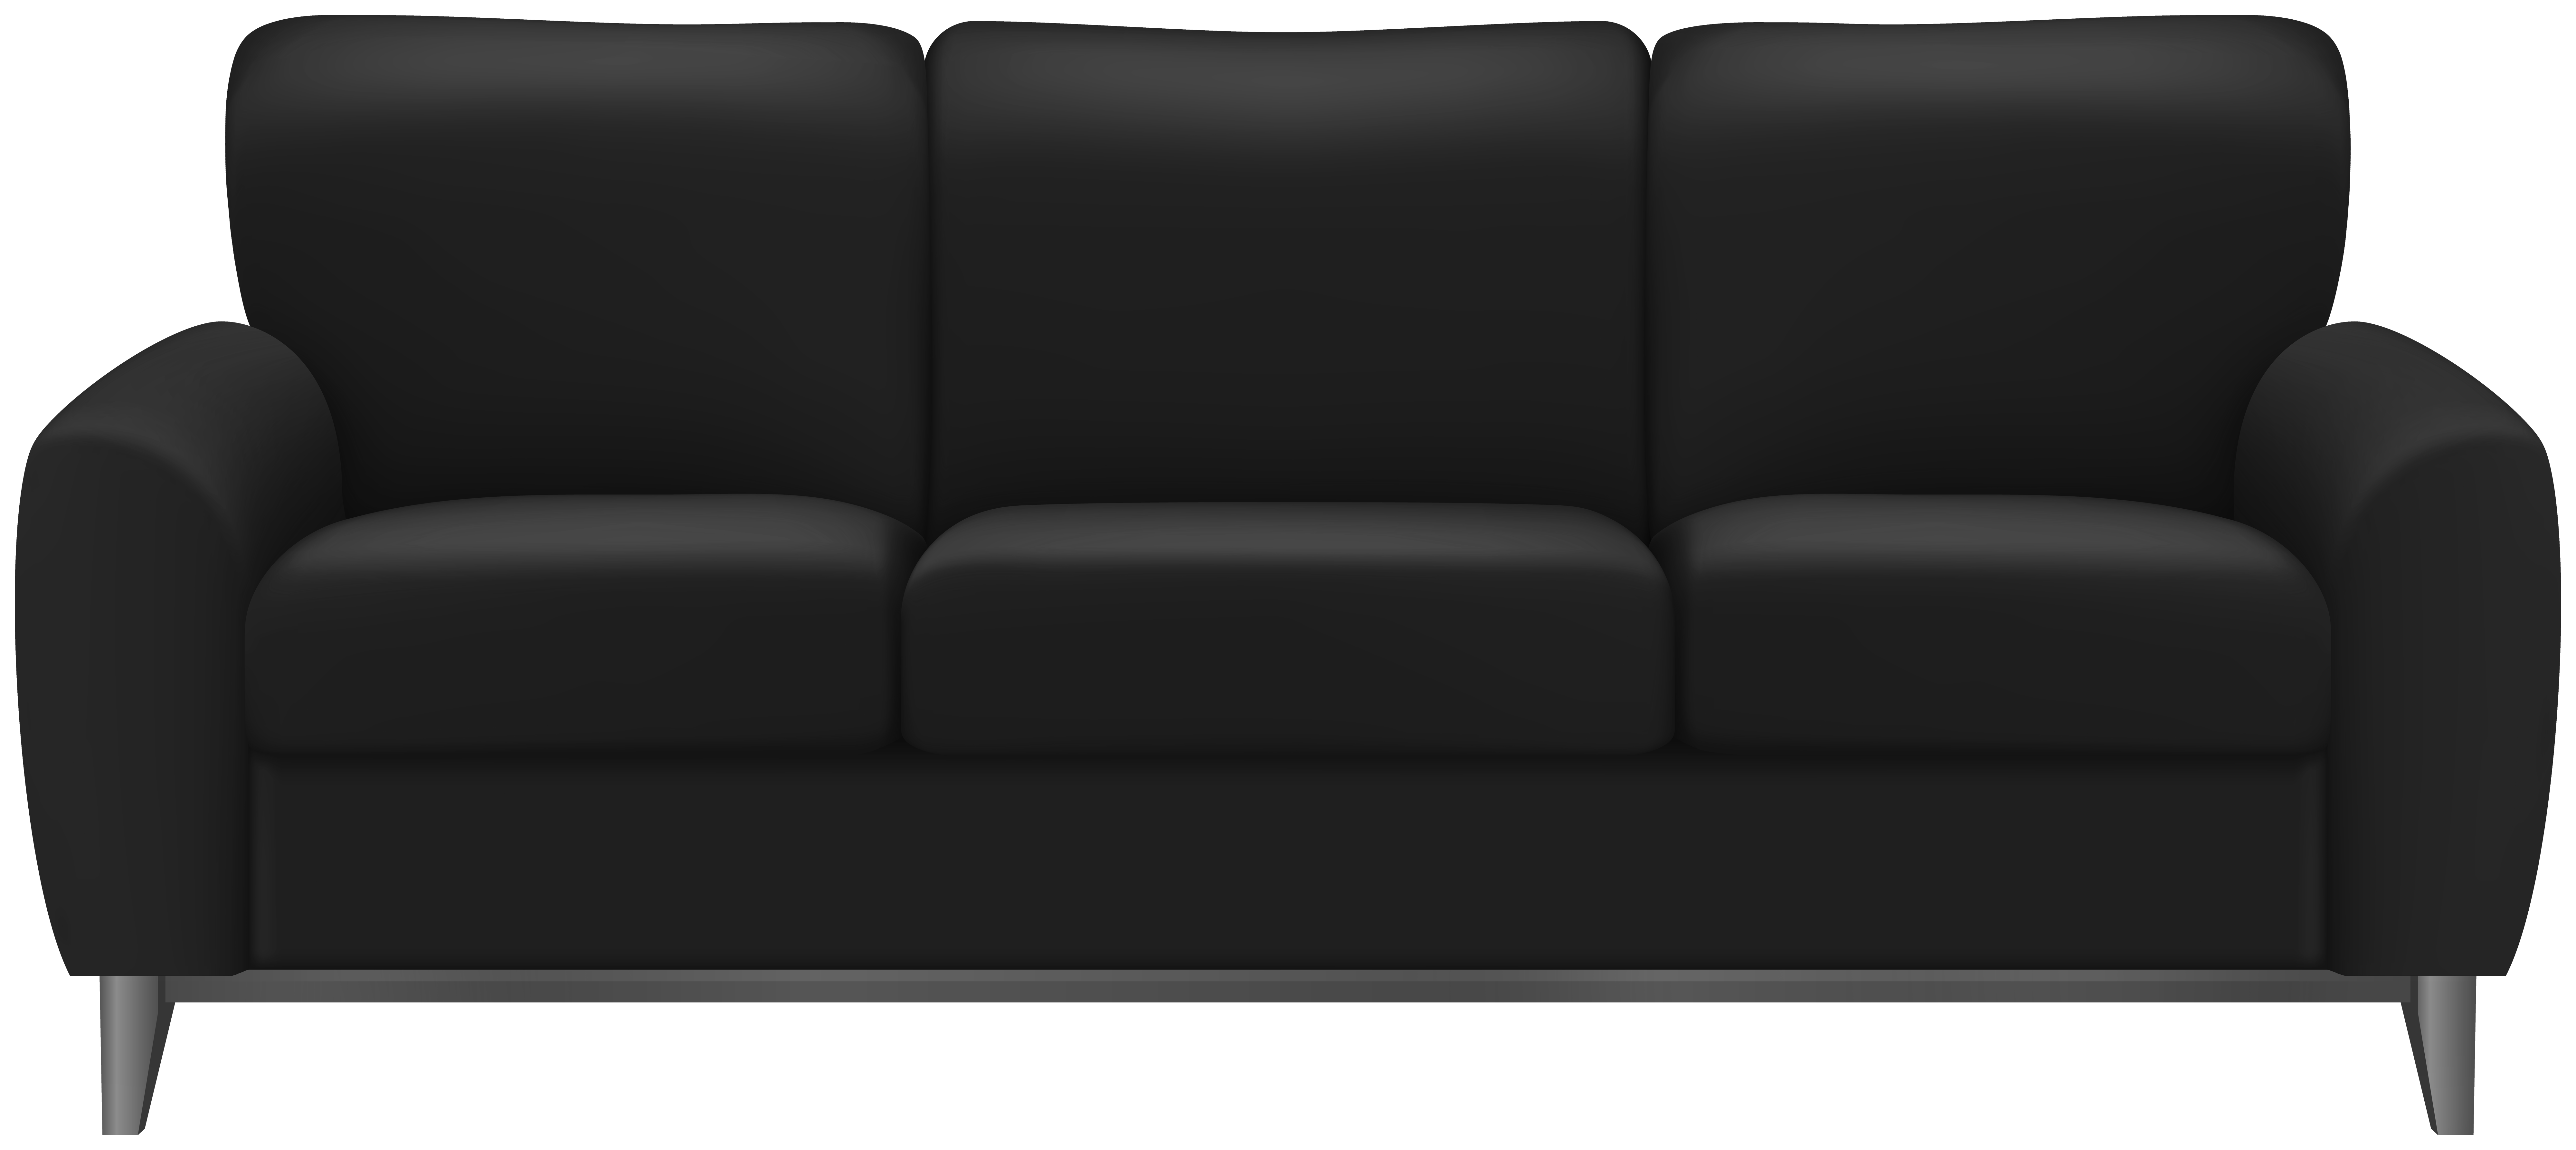 Black Sofa Transparent Clipart ?m=1608202974